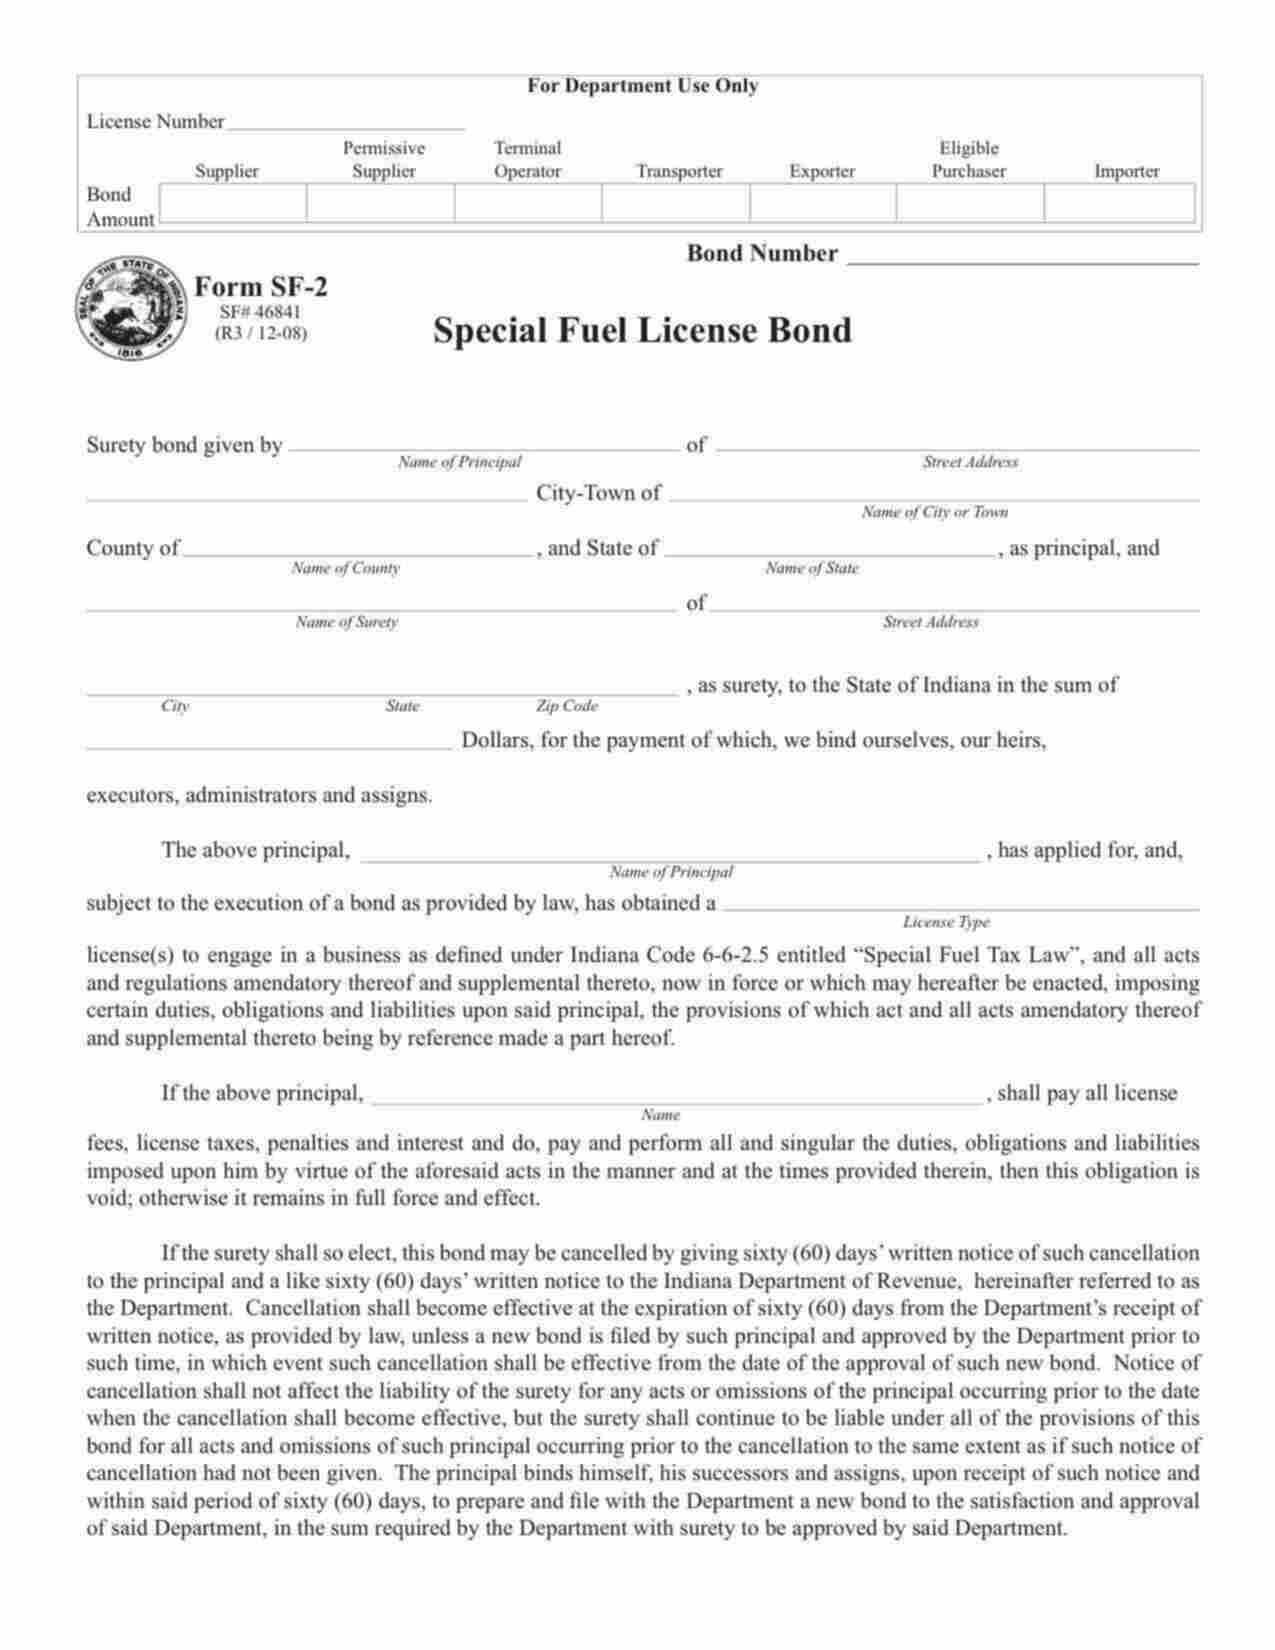 Indiana Special Fuel License - Exporter Bond Form